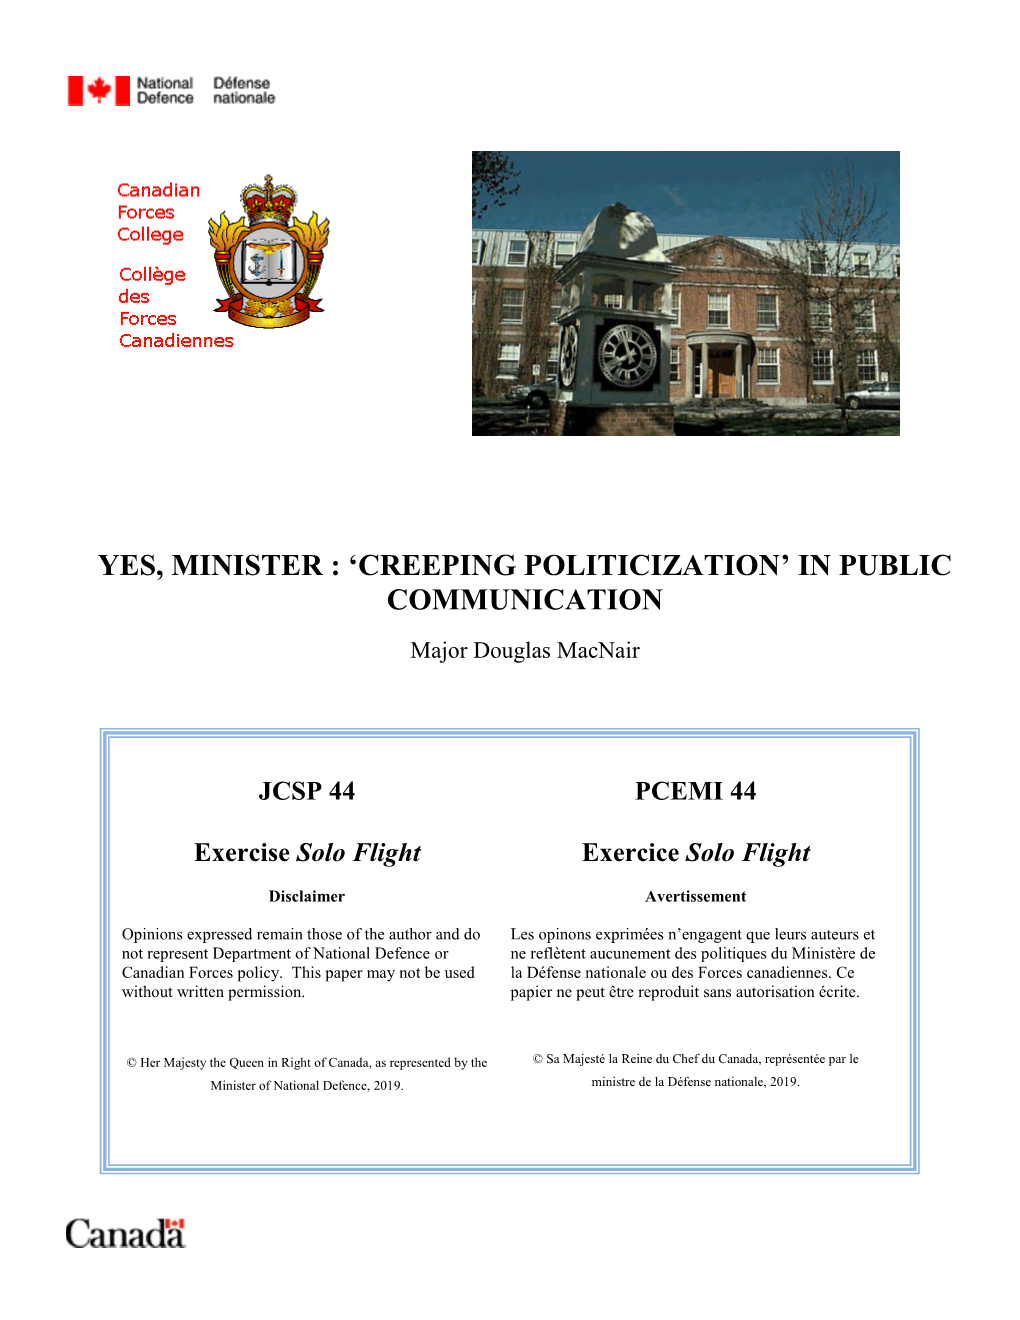 "Creeping Politicization" in Public Communication